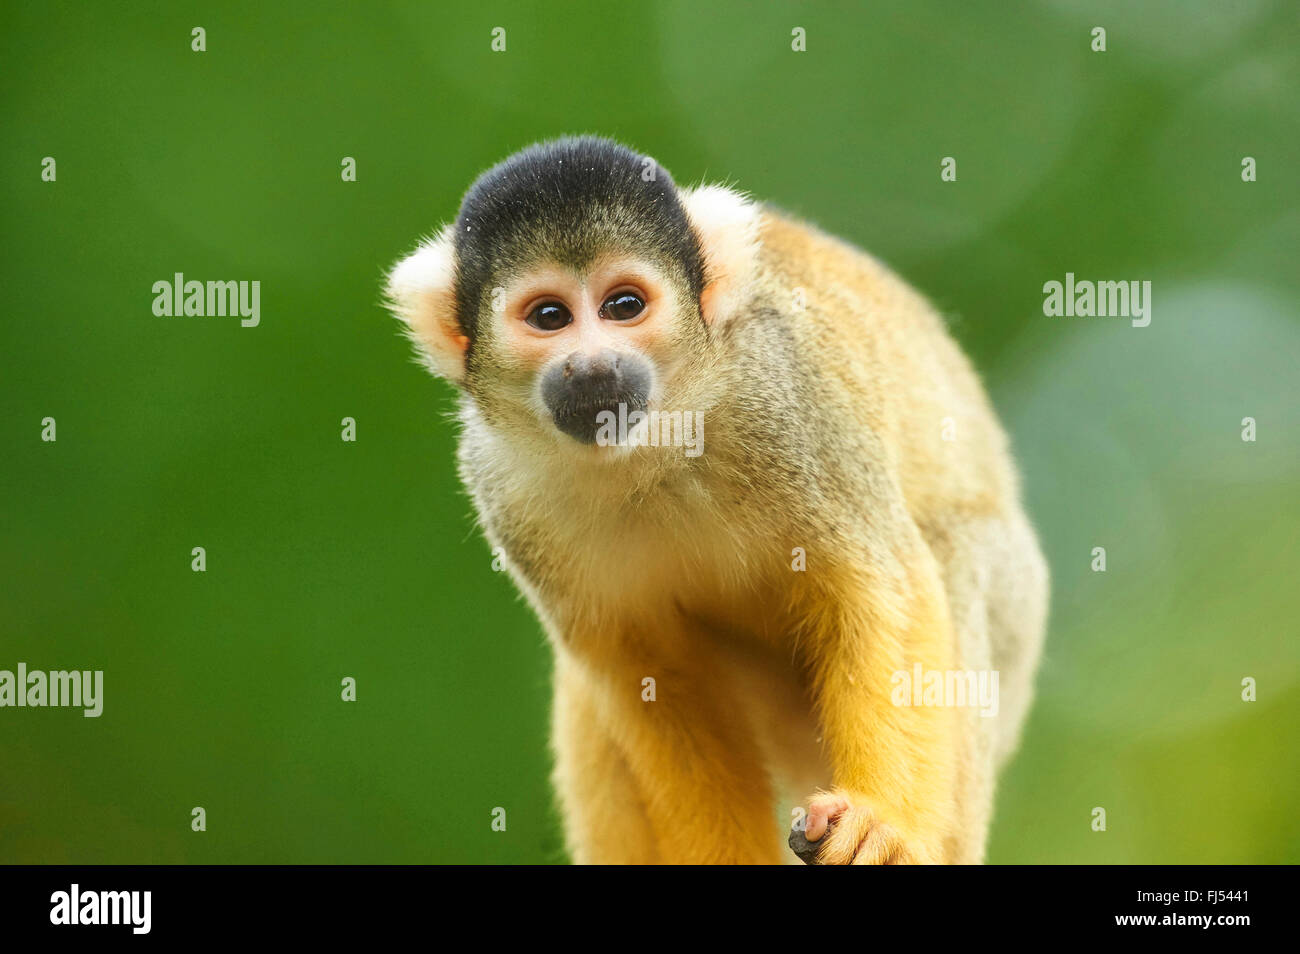 common squirrel monkey (Saimiri sciureus), portrait Stock Photo